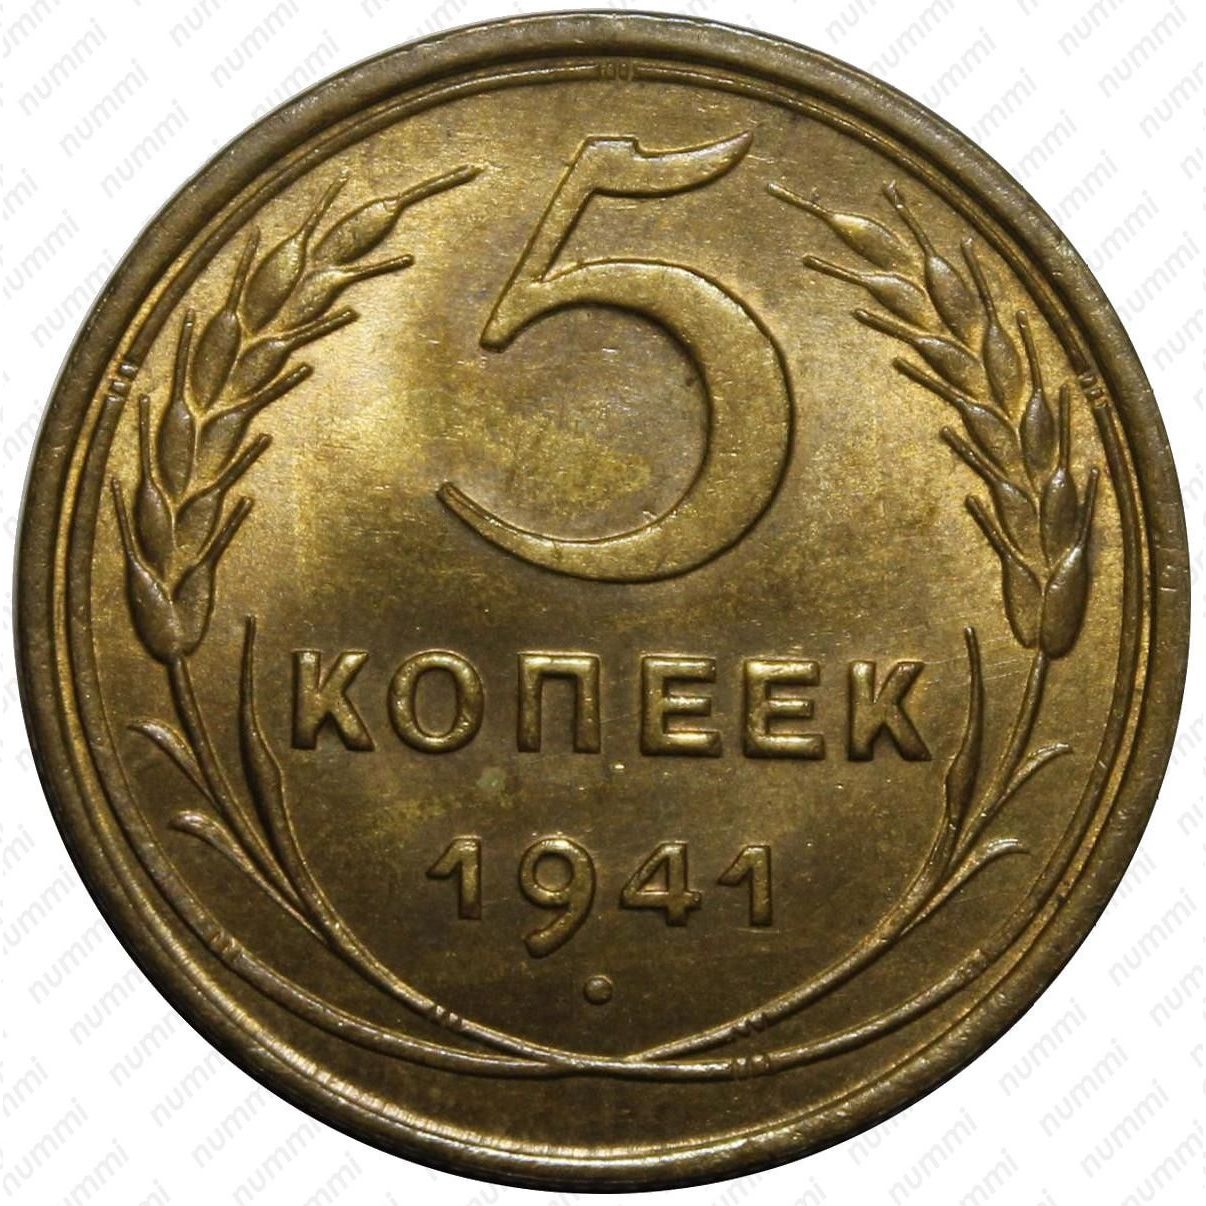 5 копеек 1941. 5 Копеек 1941 года. Монета 5 копеек 1941. Монета 3 копейки 1941. Монеты СССР 1941.